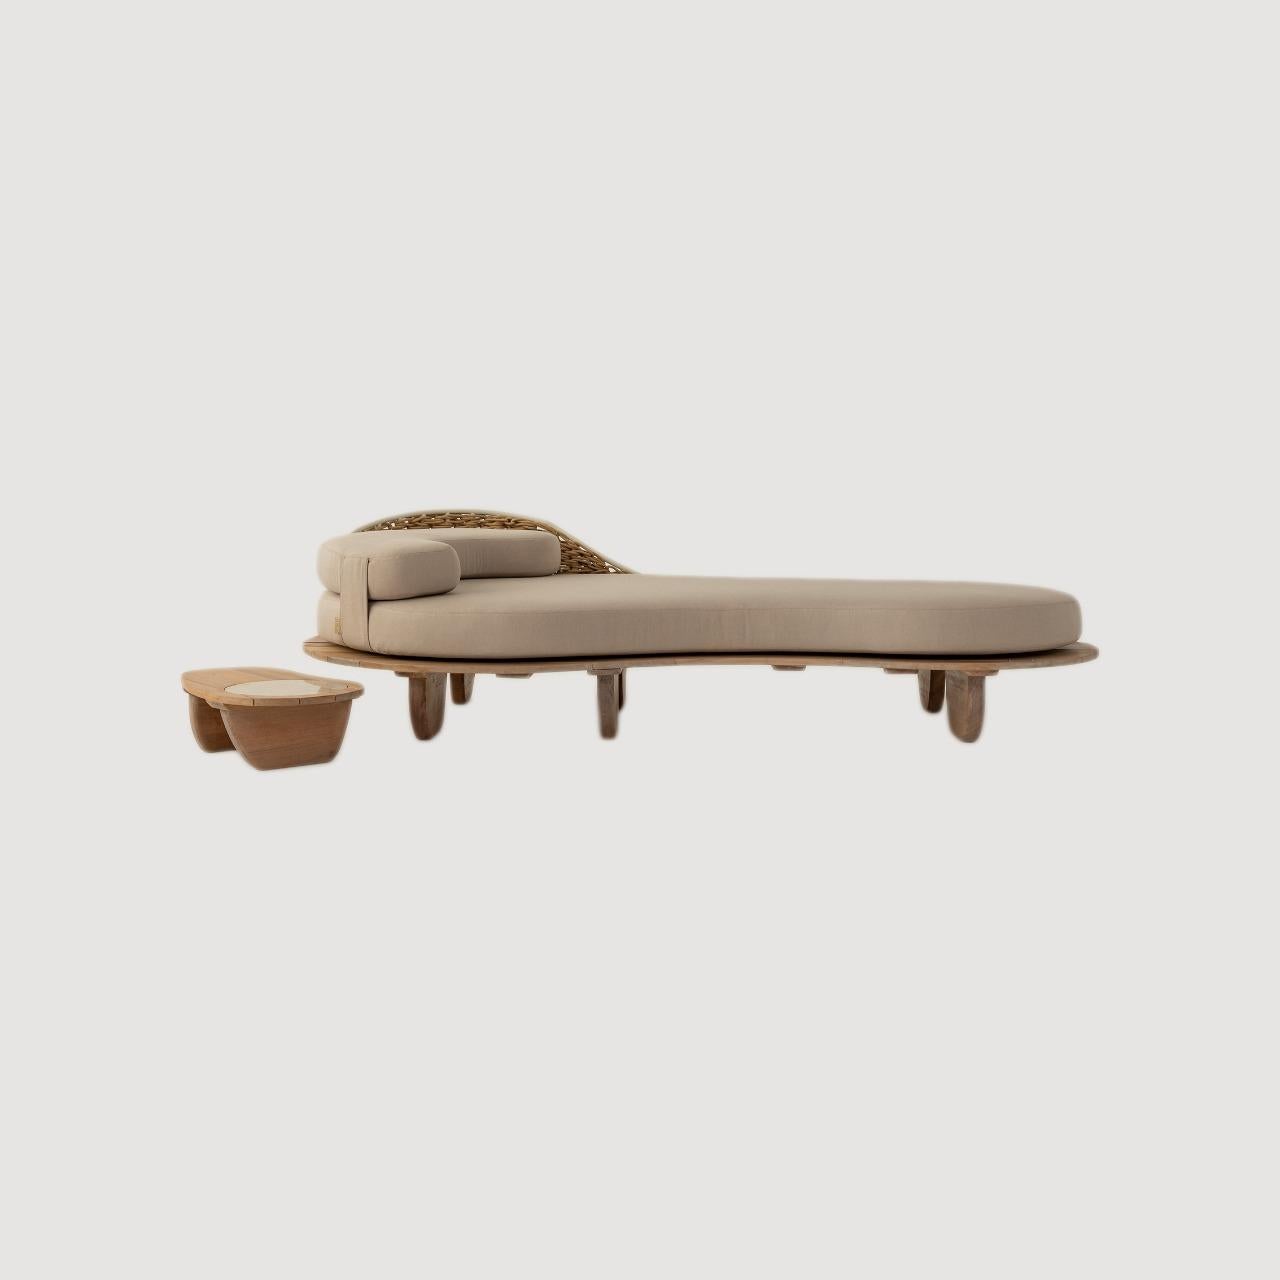 The Sayari Indoor / Outdoor Daybed Chaise and Table Kollektion von Studio Lloyd im Angebot 5